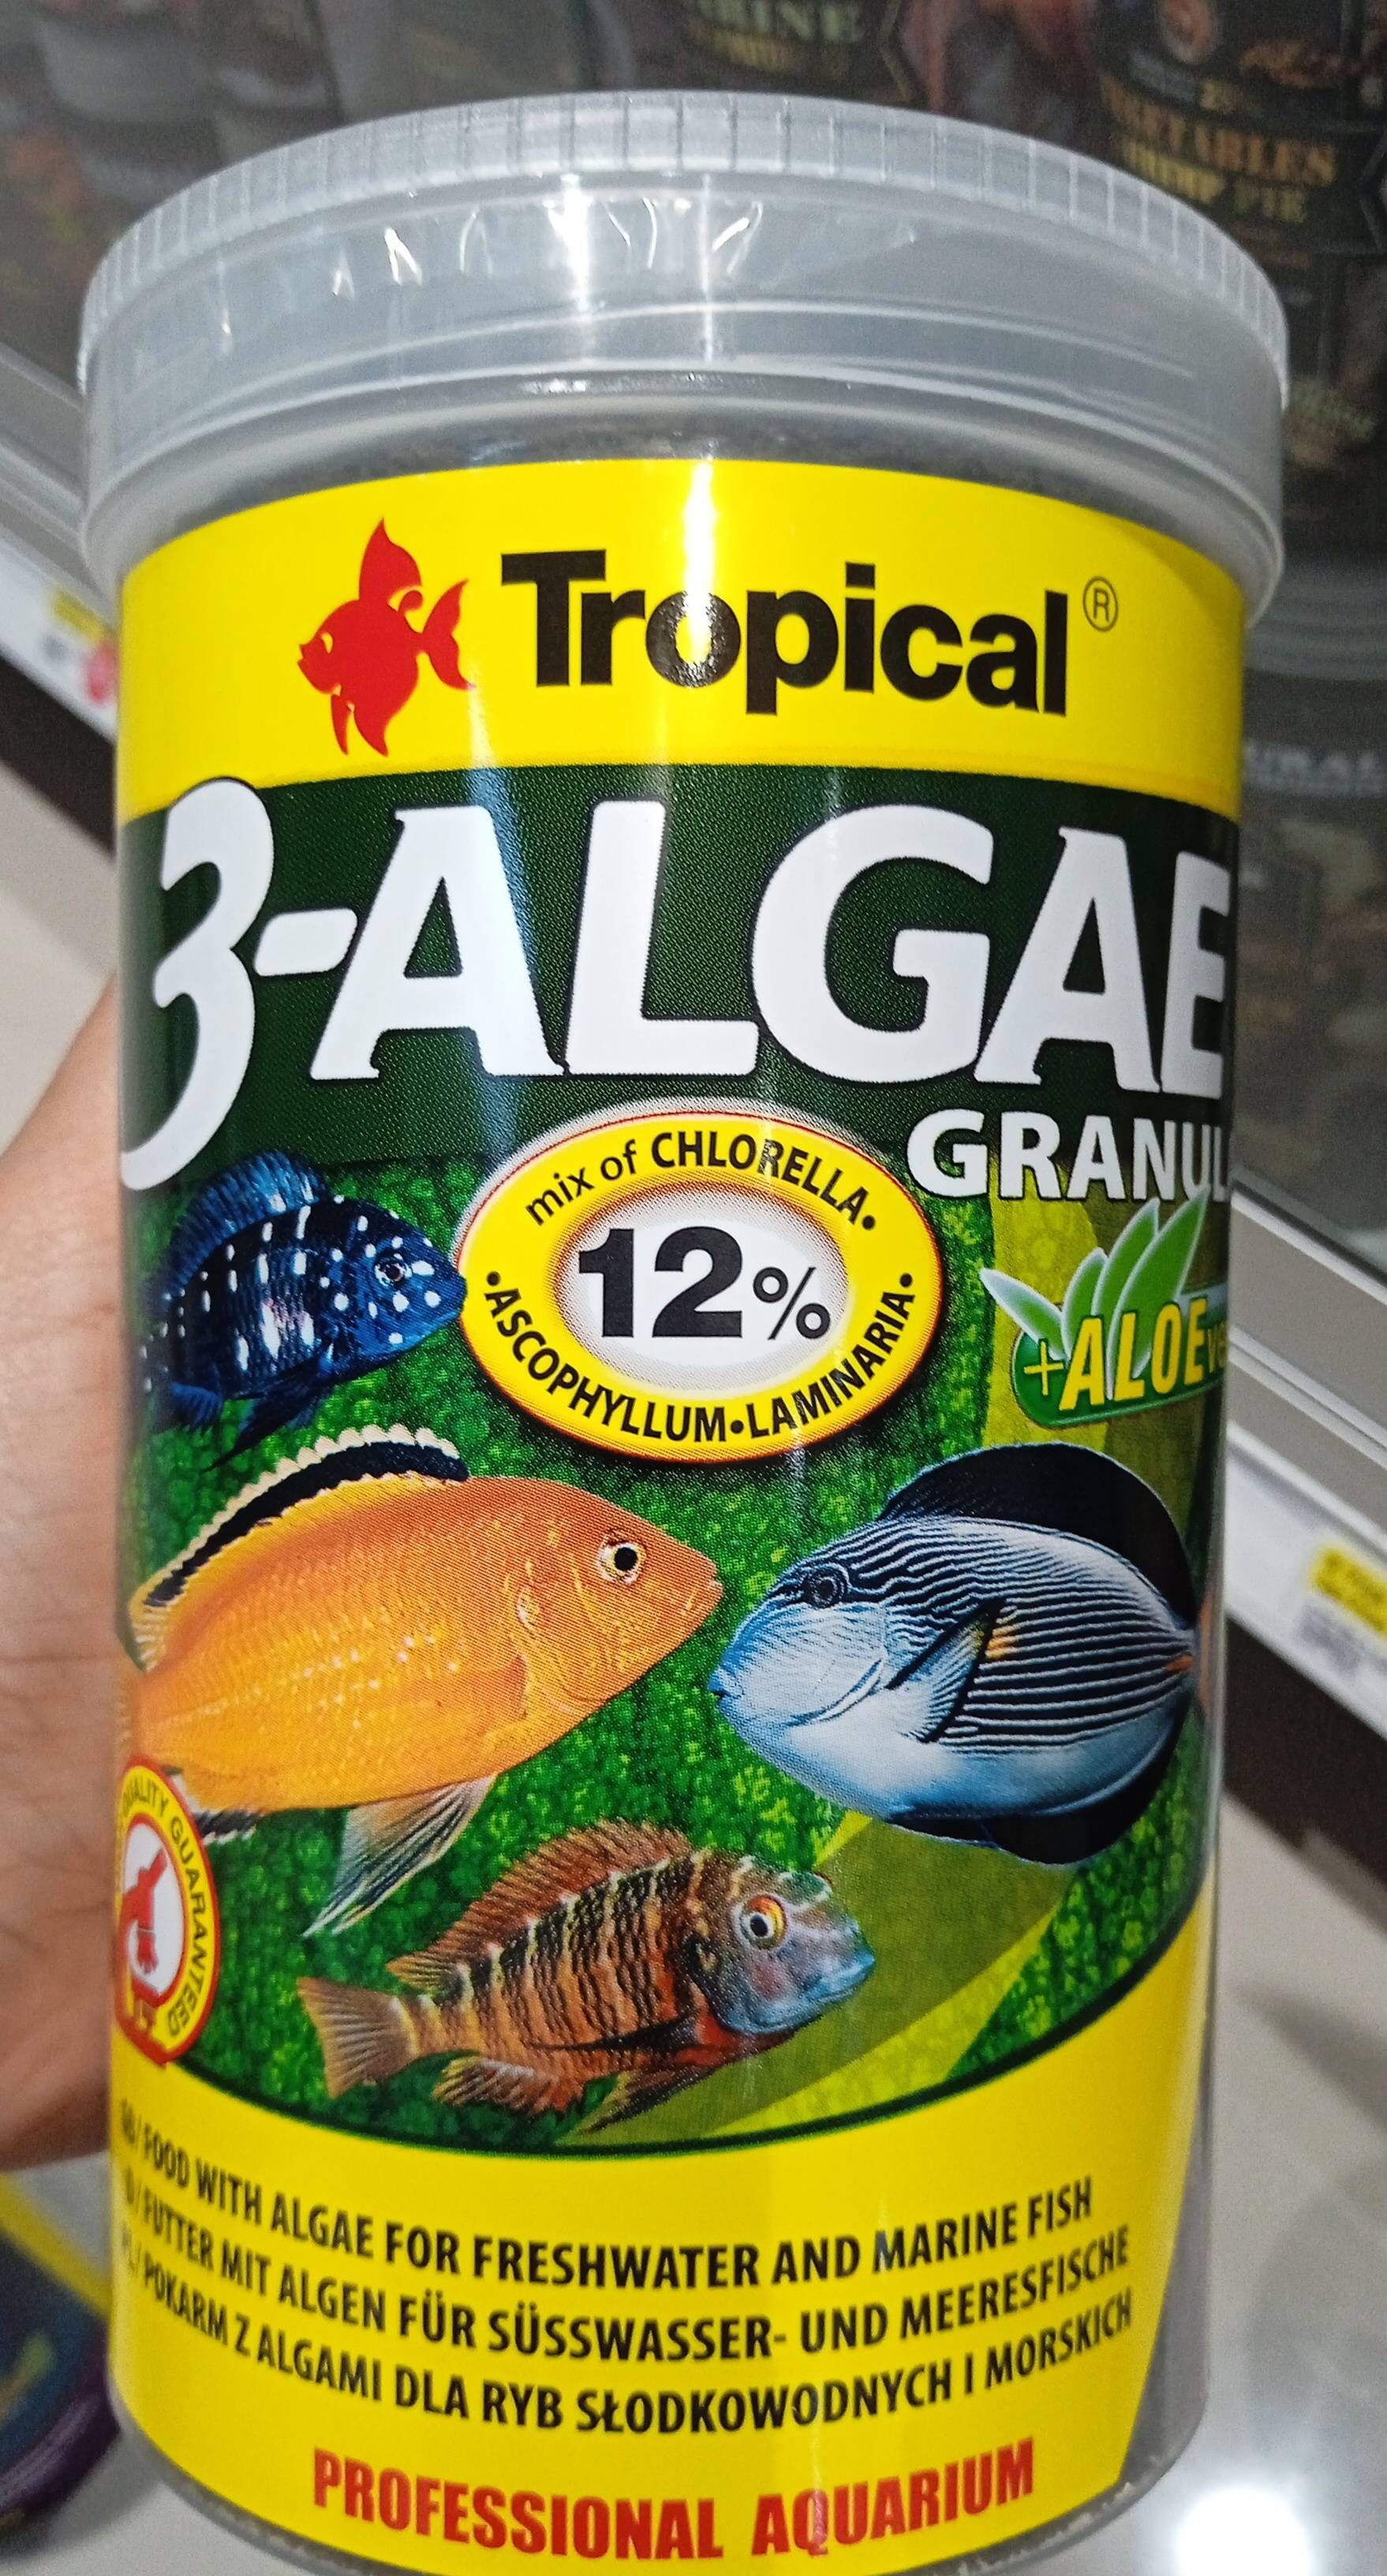 Fiah food 3 algae gran - Product - id